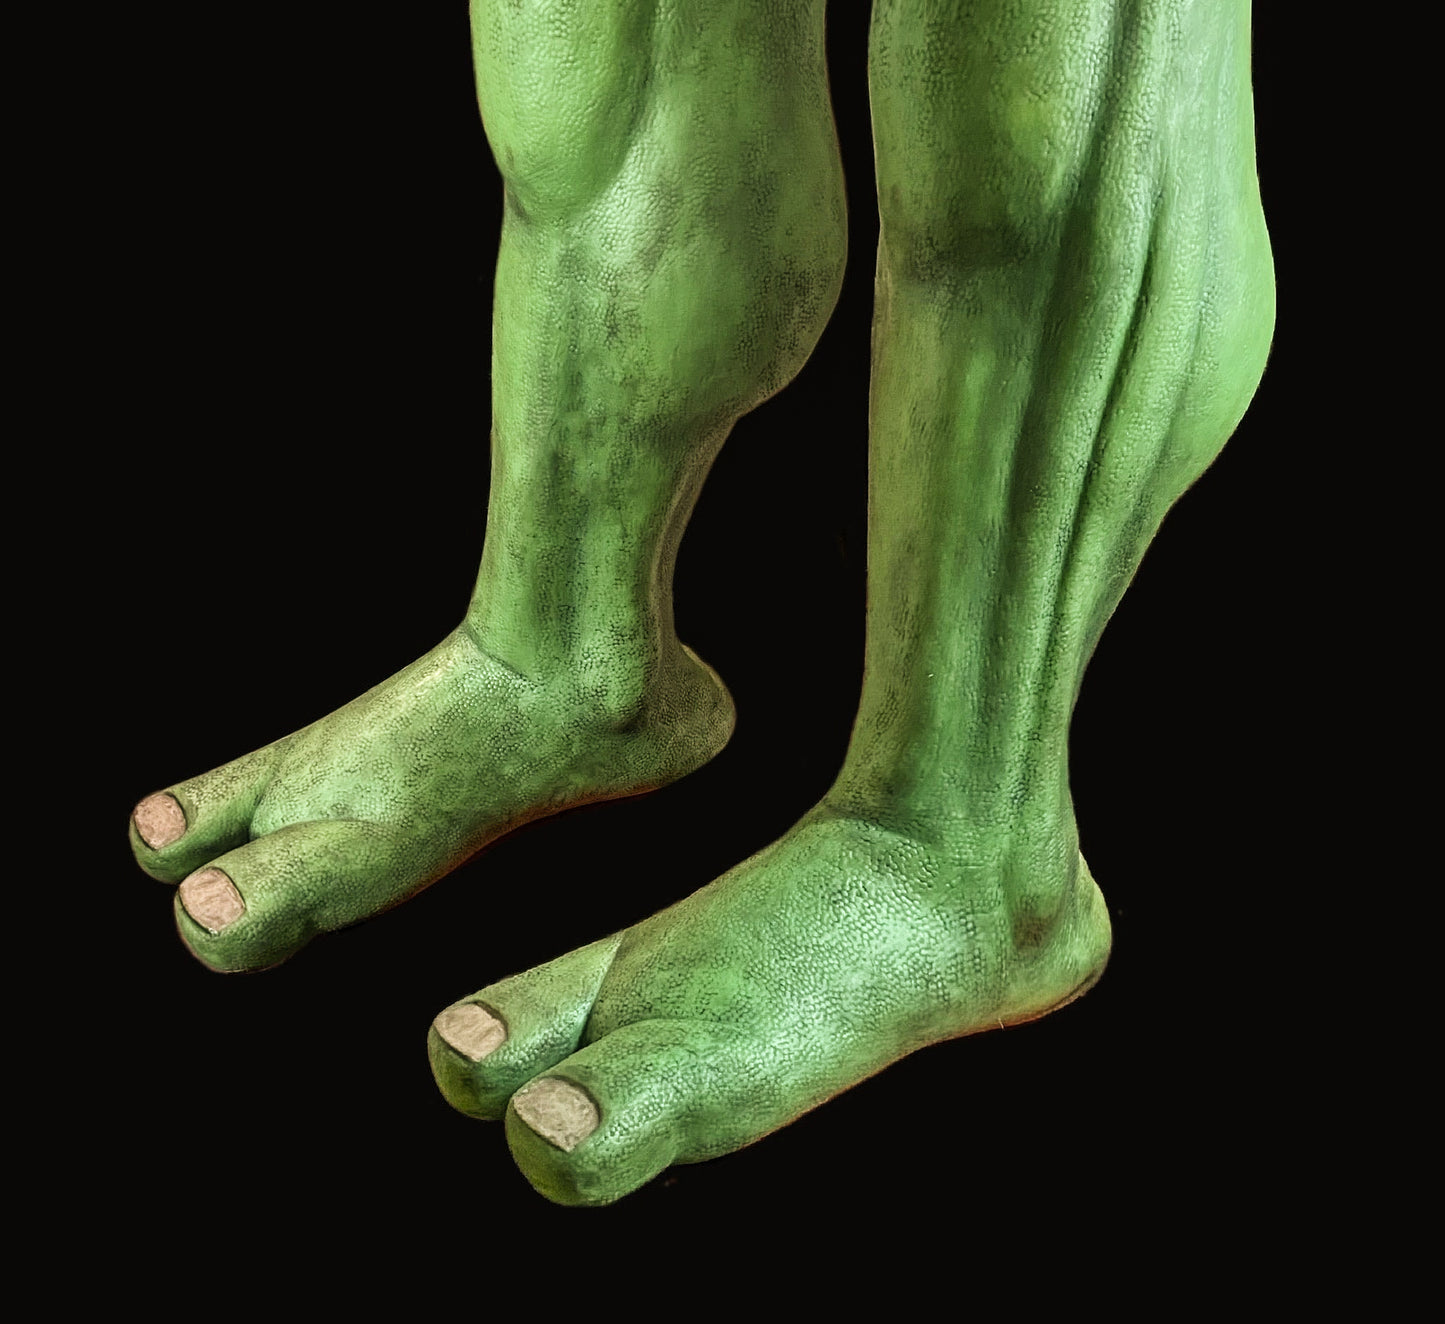 PARTS BUNDLE: Hands, Forearms, Lower Legs + Feet